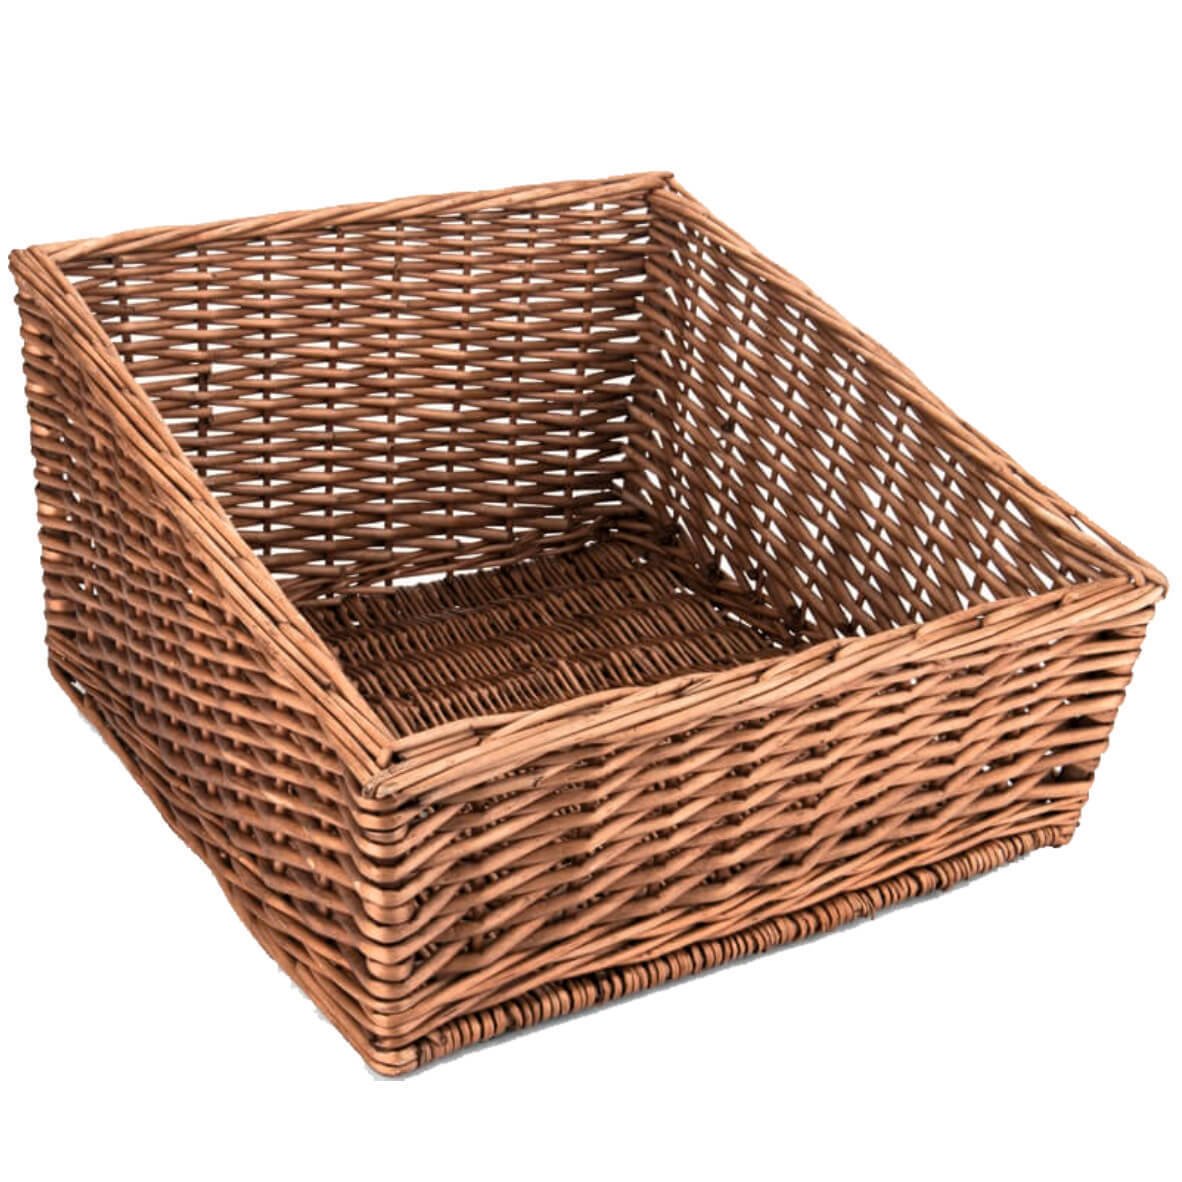 Natural woven baskets